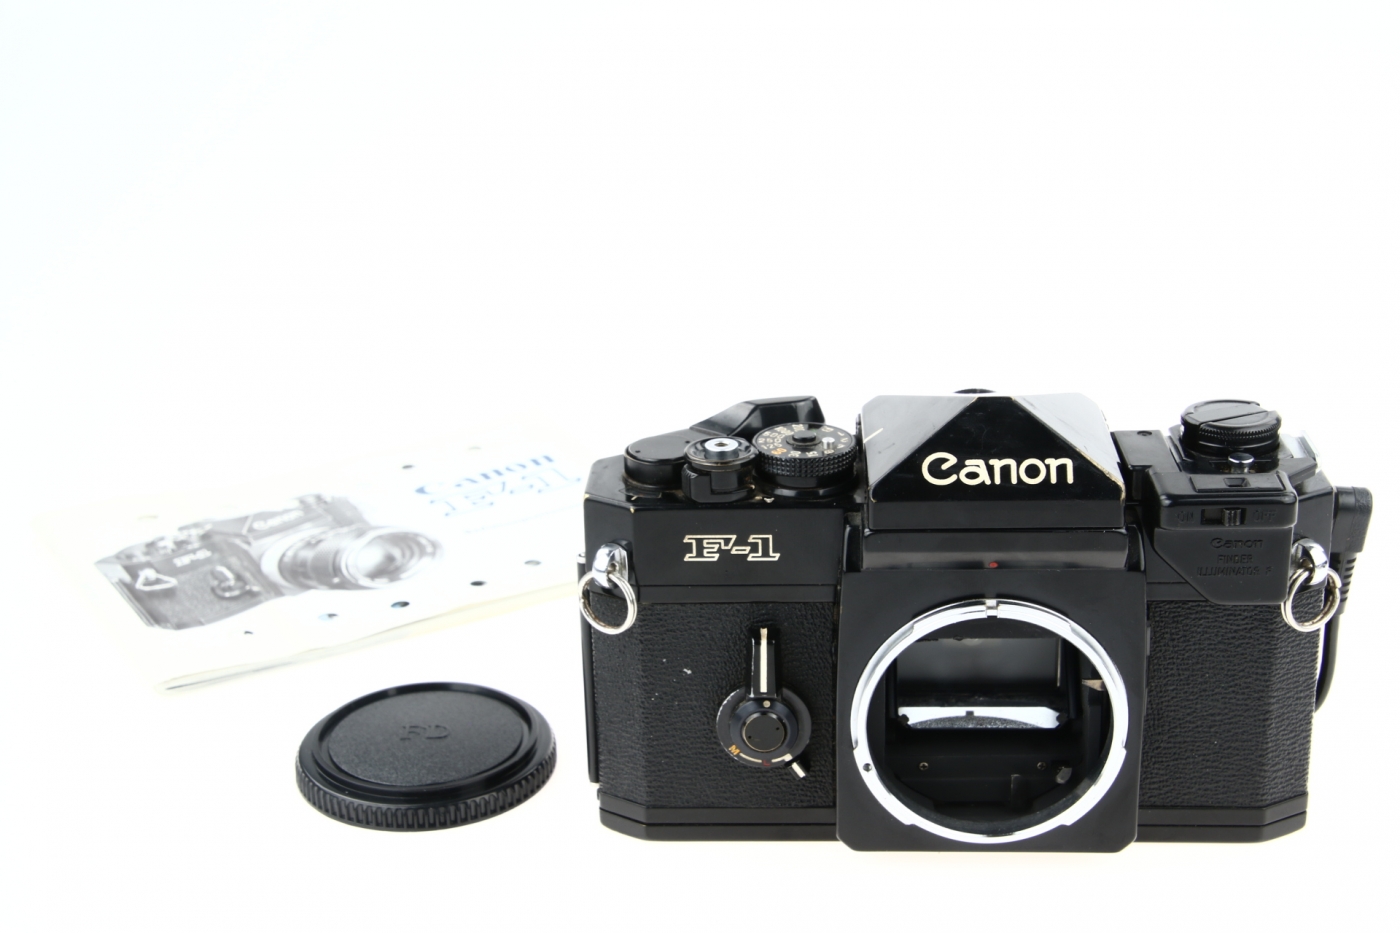 Canon F-1 + Data Back F + Finder Illuminator F za 8876 Kč - Allegro